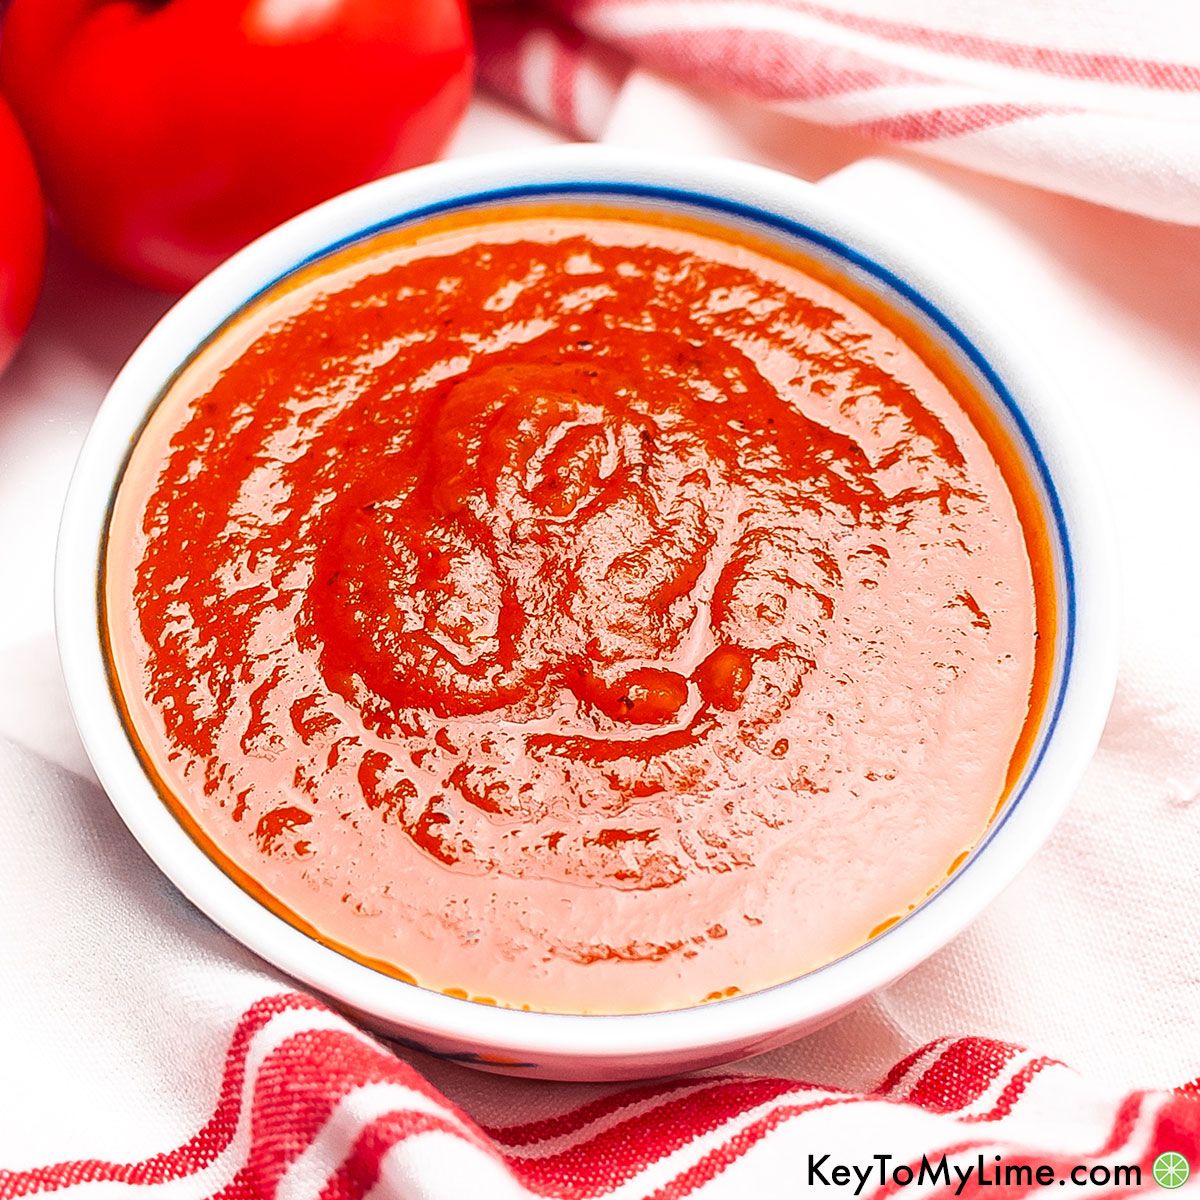 https://cf8480cb.flyingcdn.com/wp-content/uploads/2021/07/Best-Instant-Pot-Tomato-Sauce-Recipe.jpg